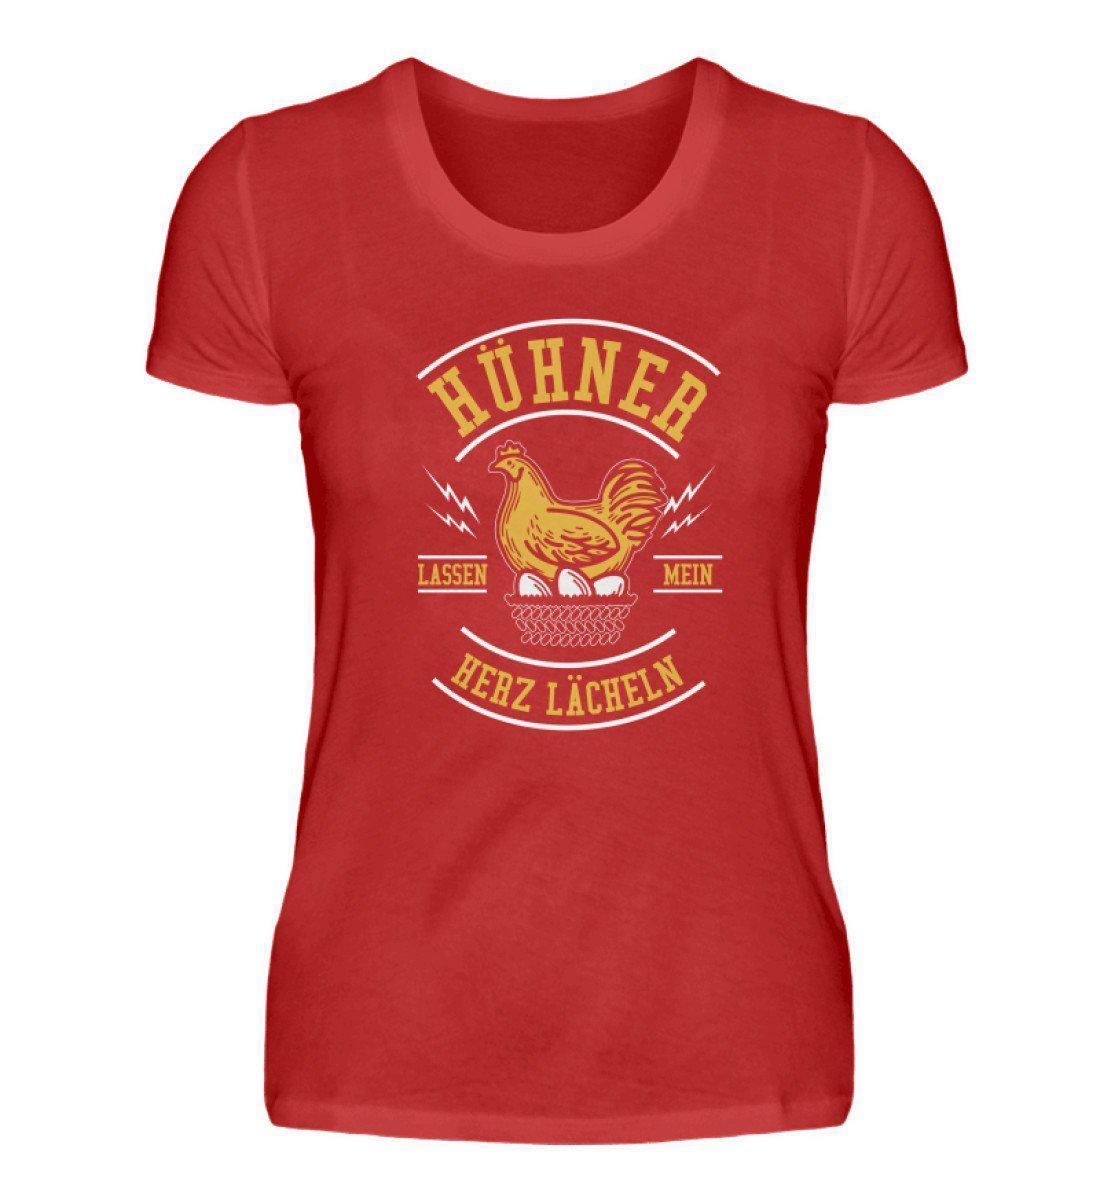 Hühner Herz lächeln · Damen T-Shirt-Damen Basic T-Shirt-Red-S-Agrarstarz